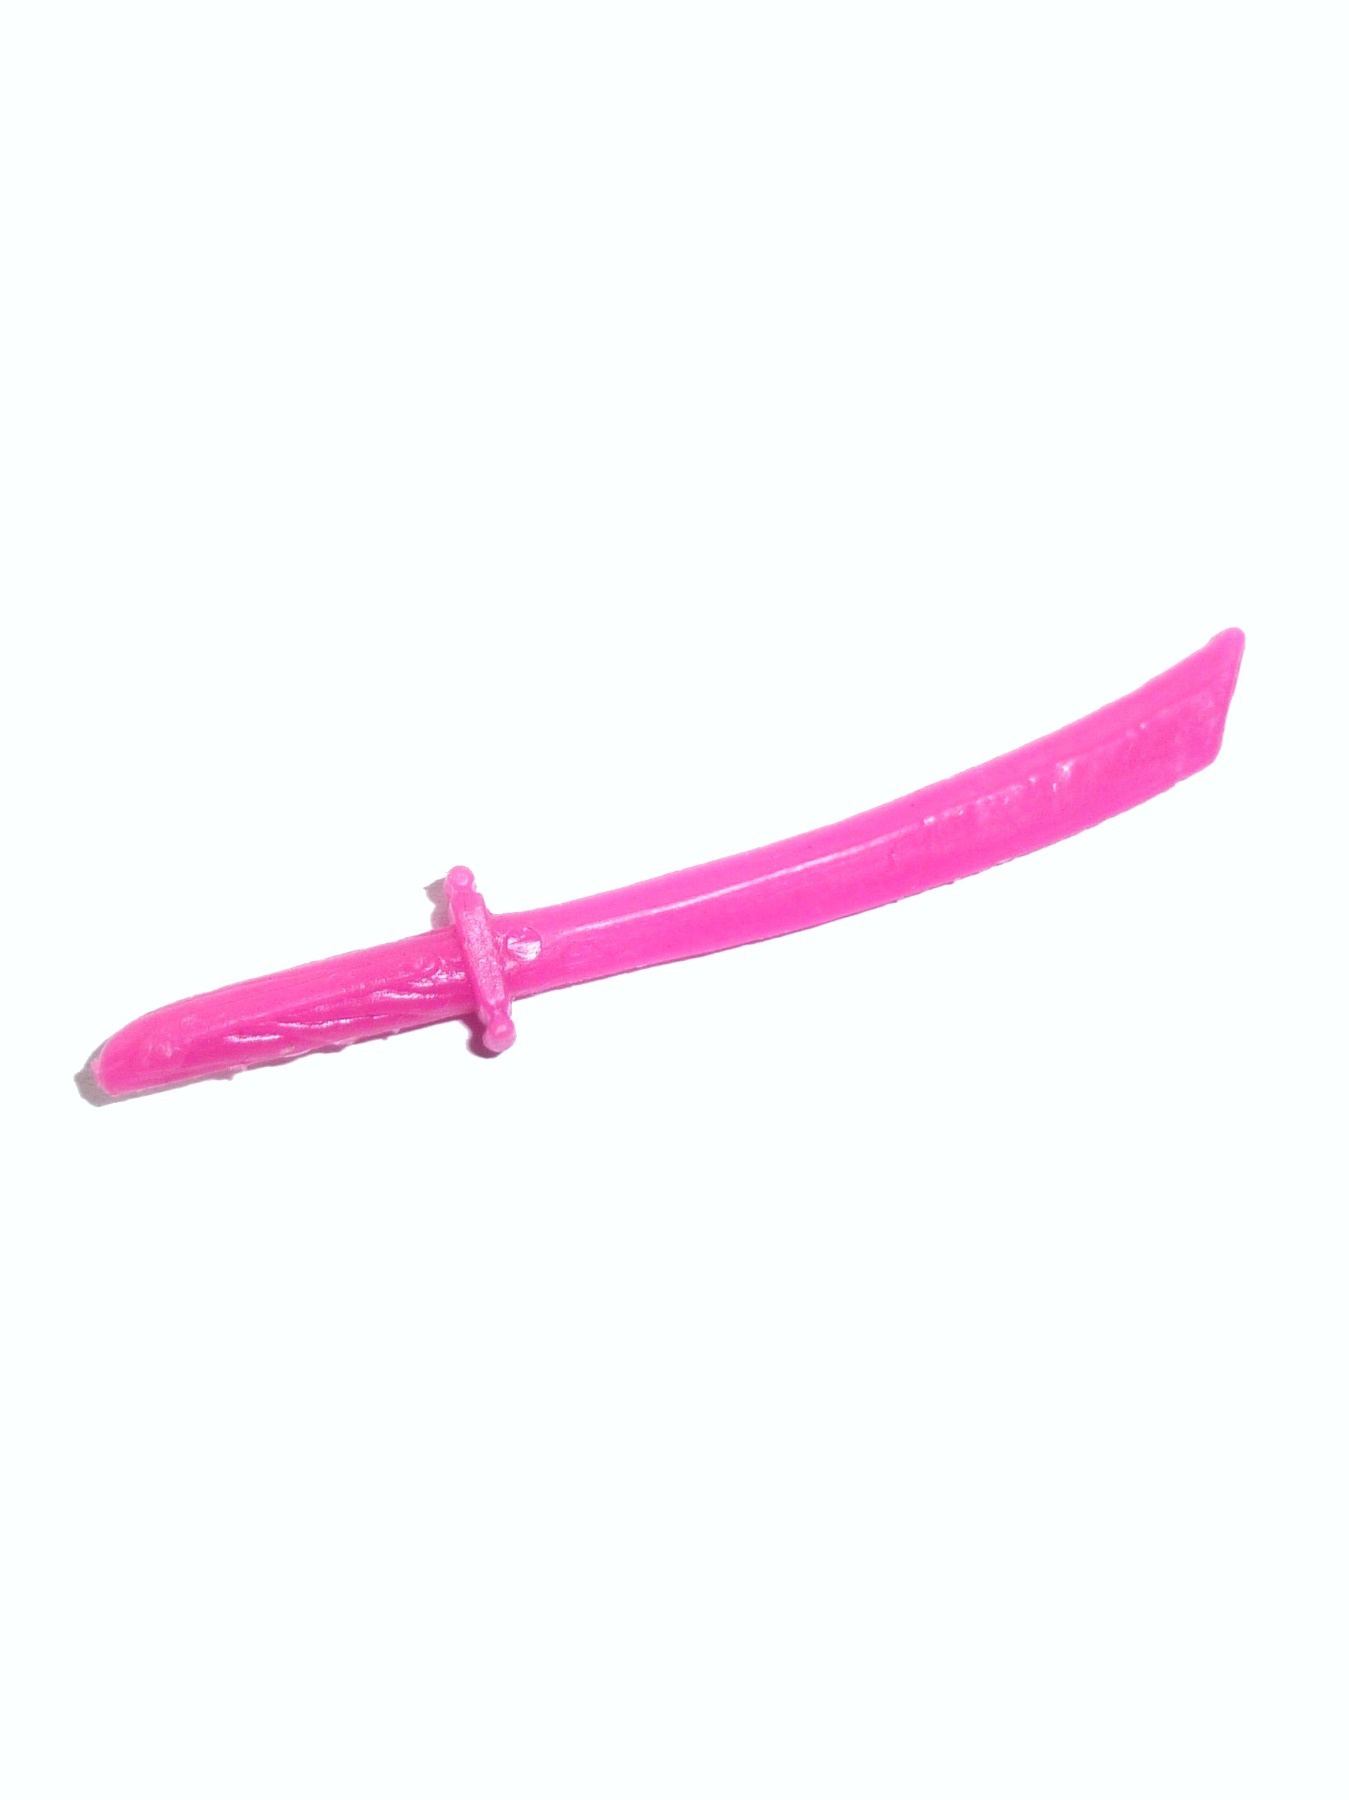 Capn Troll pink sword/weapon Hasbro 1992